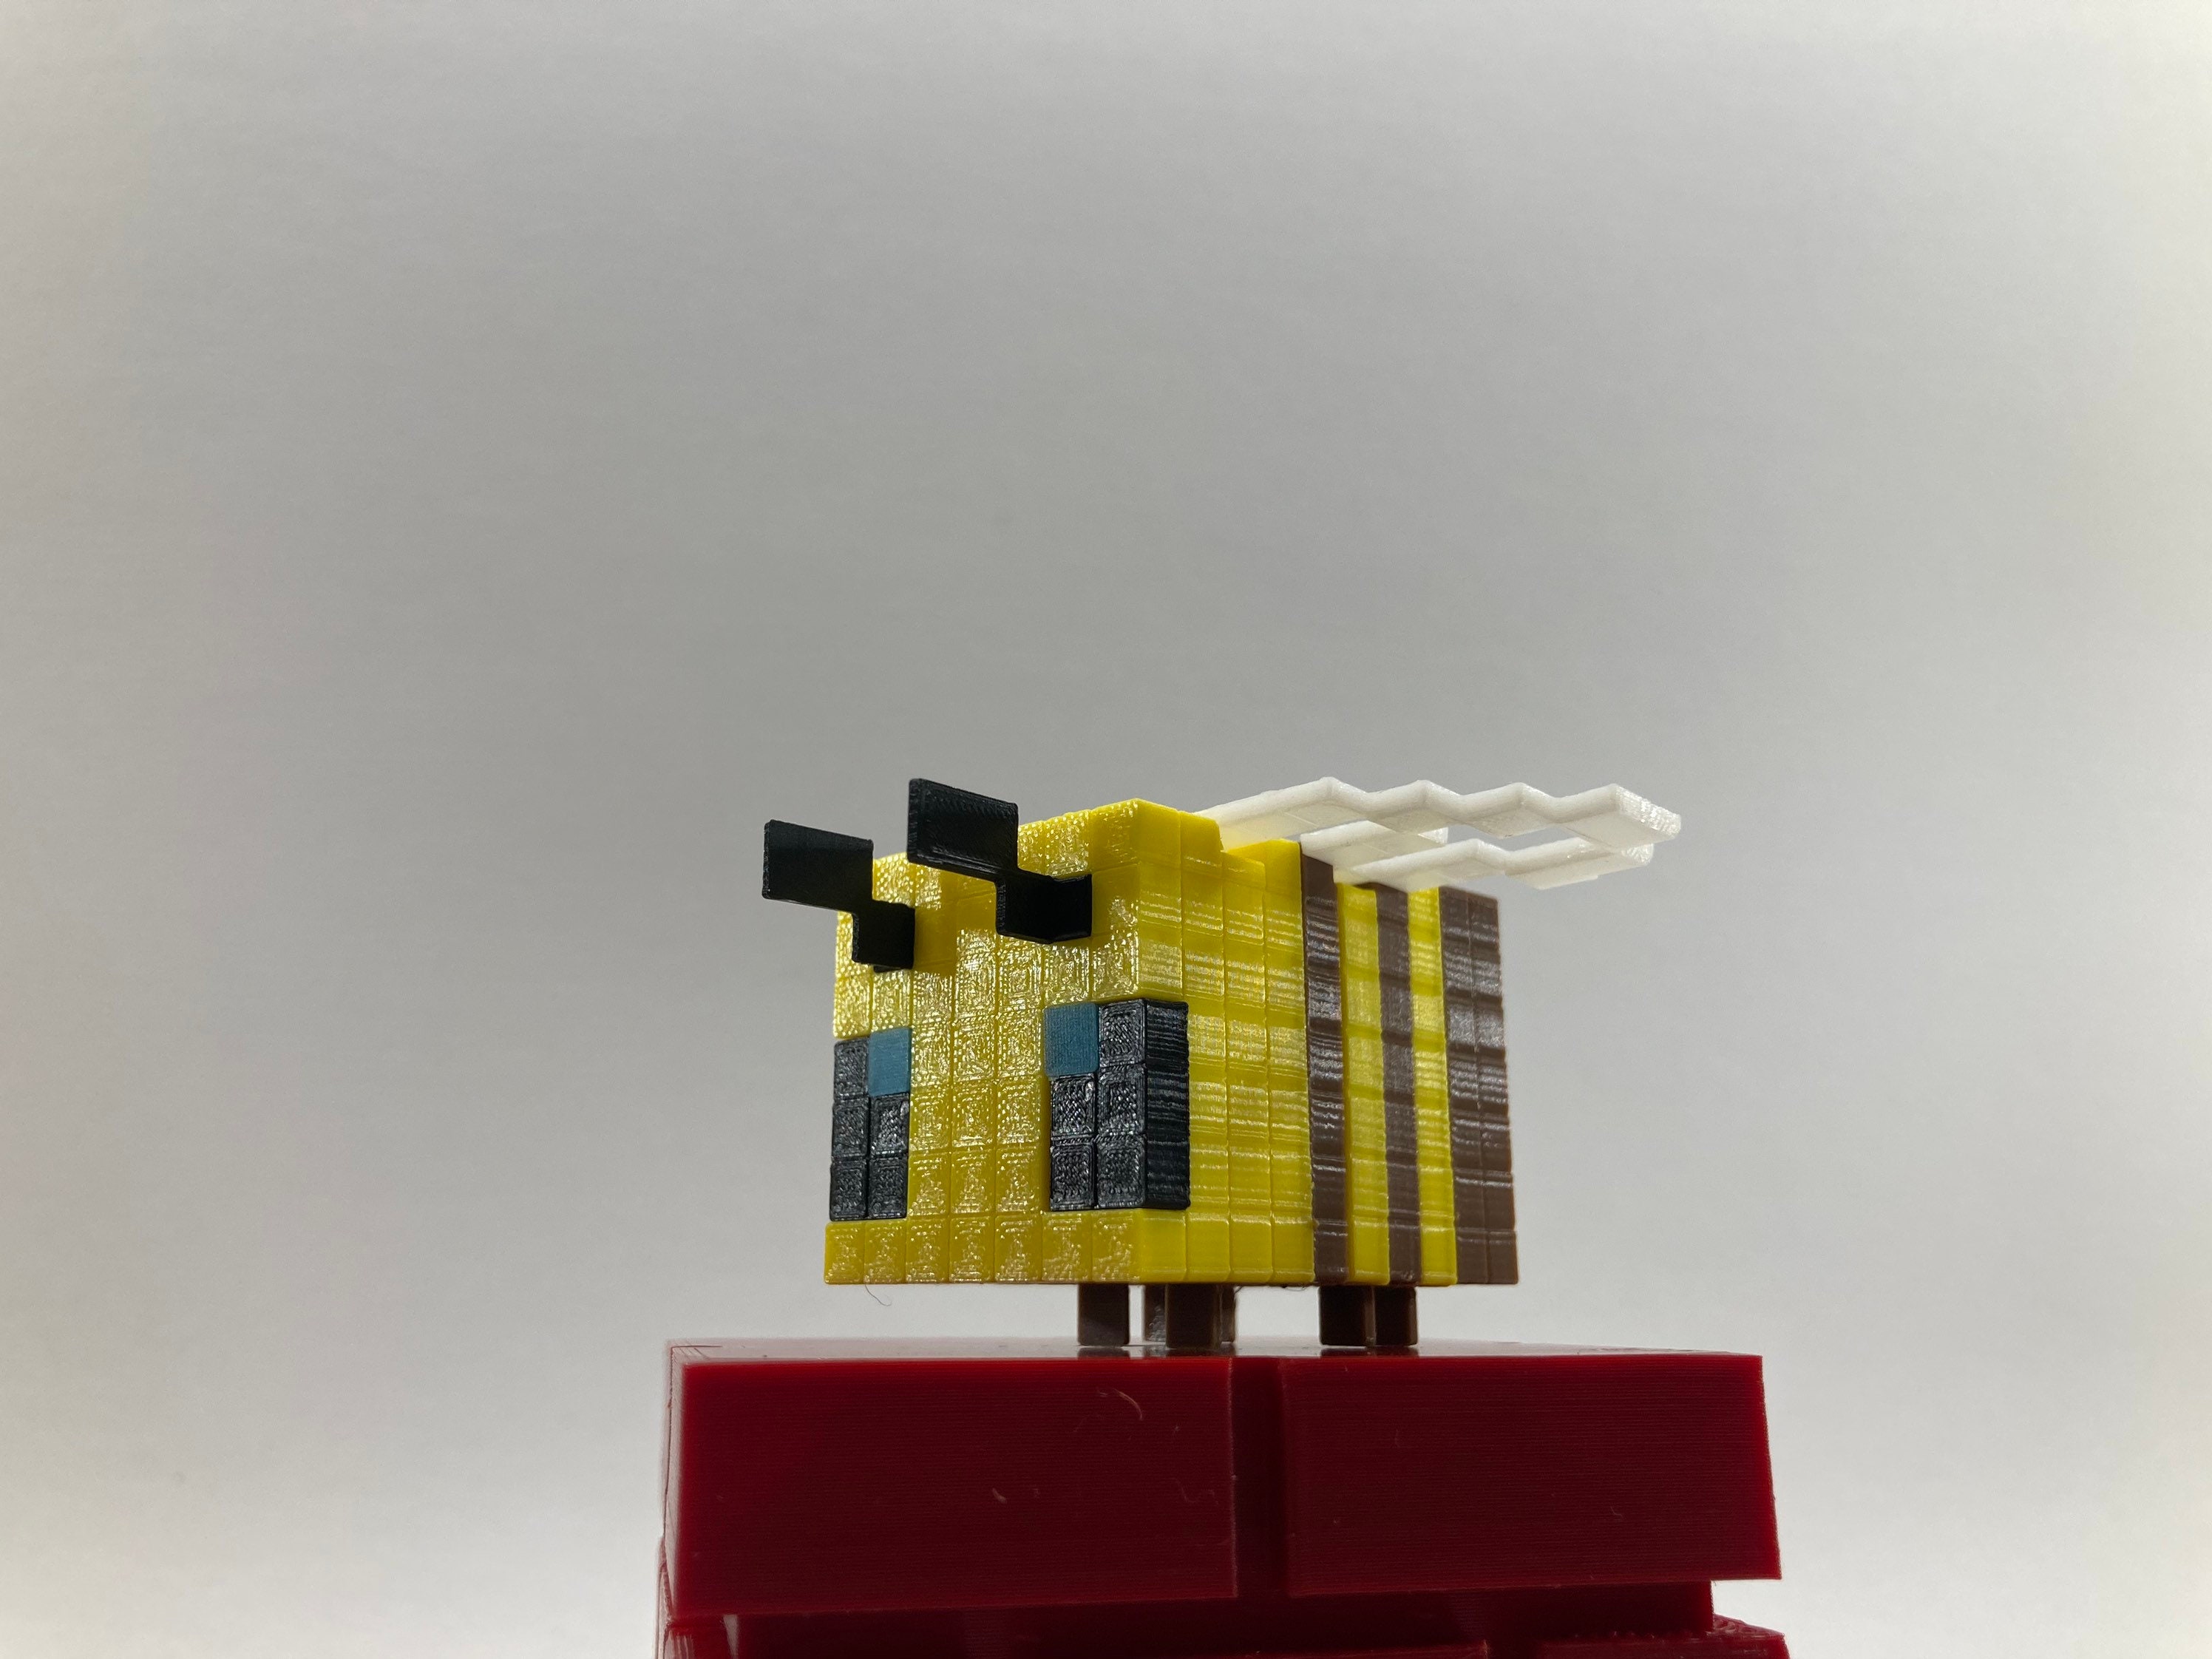 Minecraft-inspired Bee Fan Pull -  Hong Kong